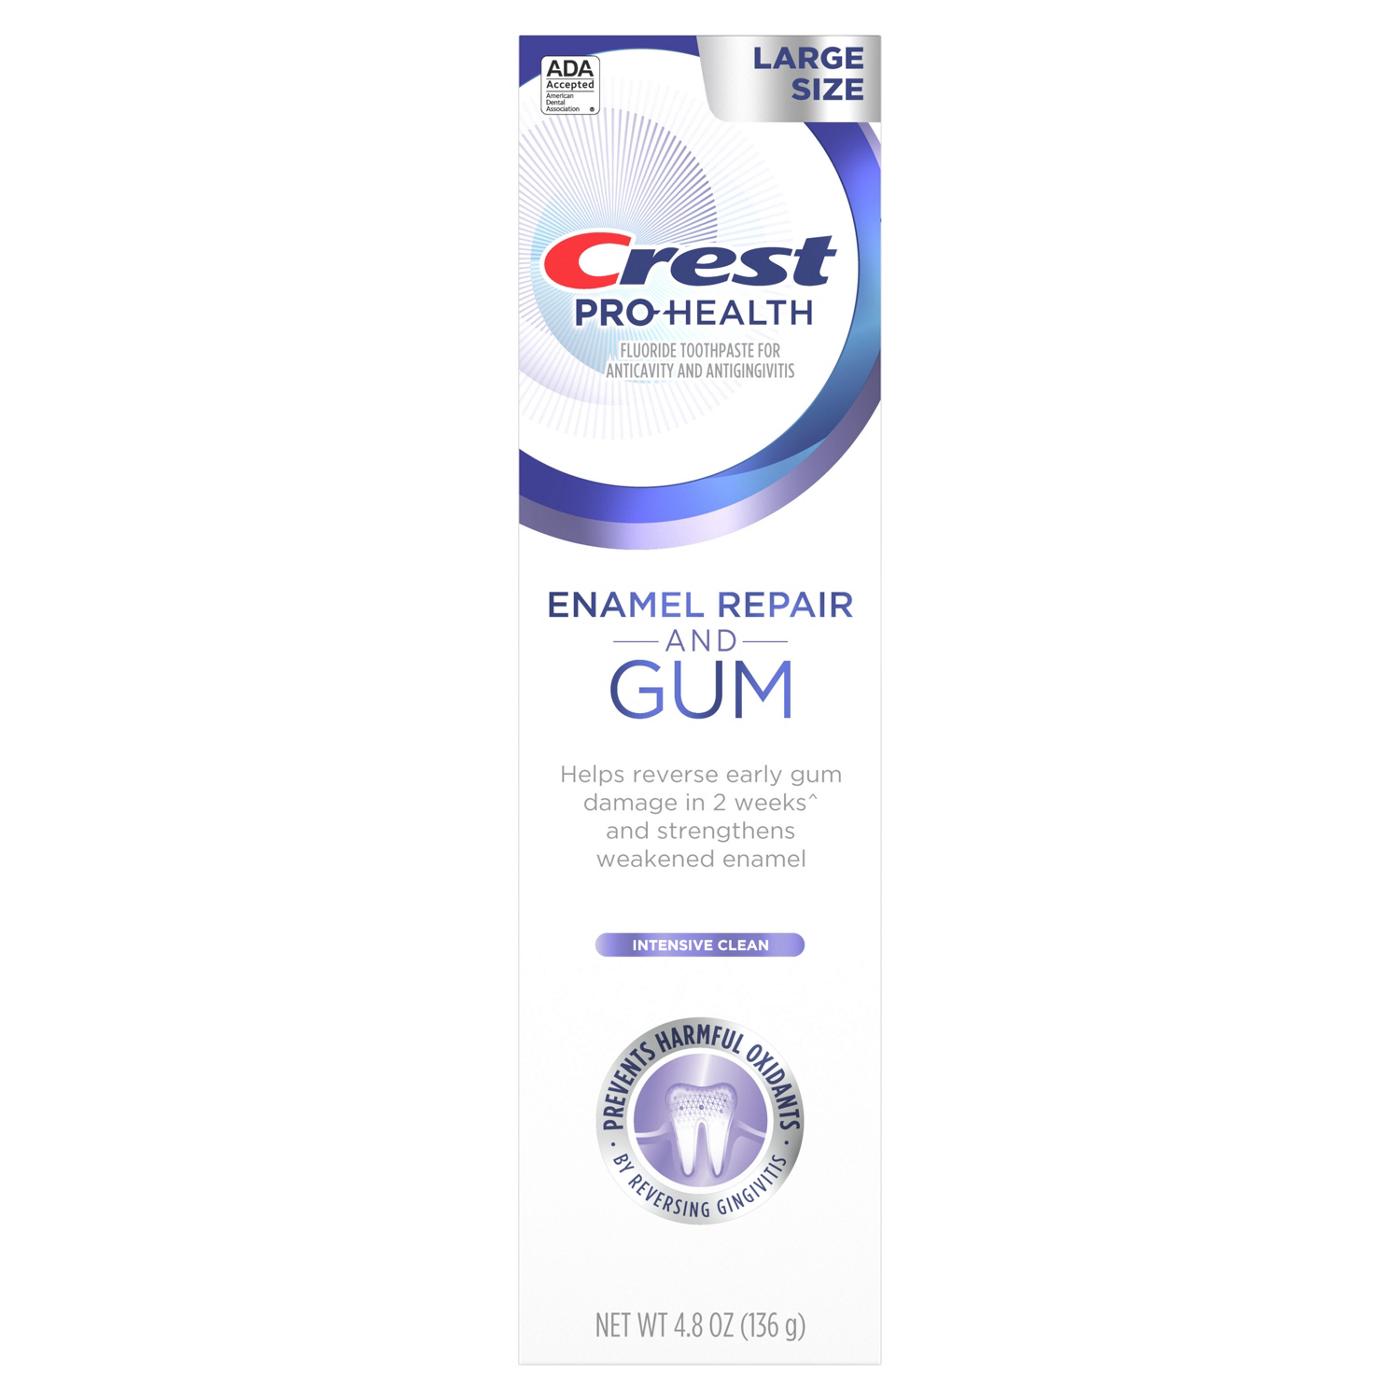 Crest Pro Health Enamel Repair & Gum Toothpaste - Intensive Clean; image 6 of 8